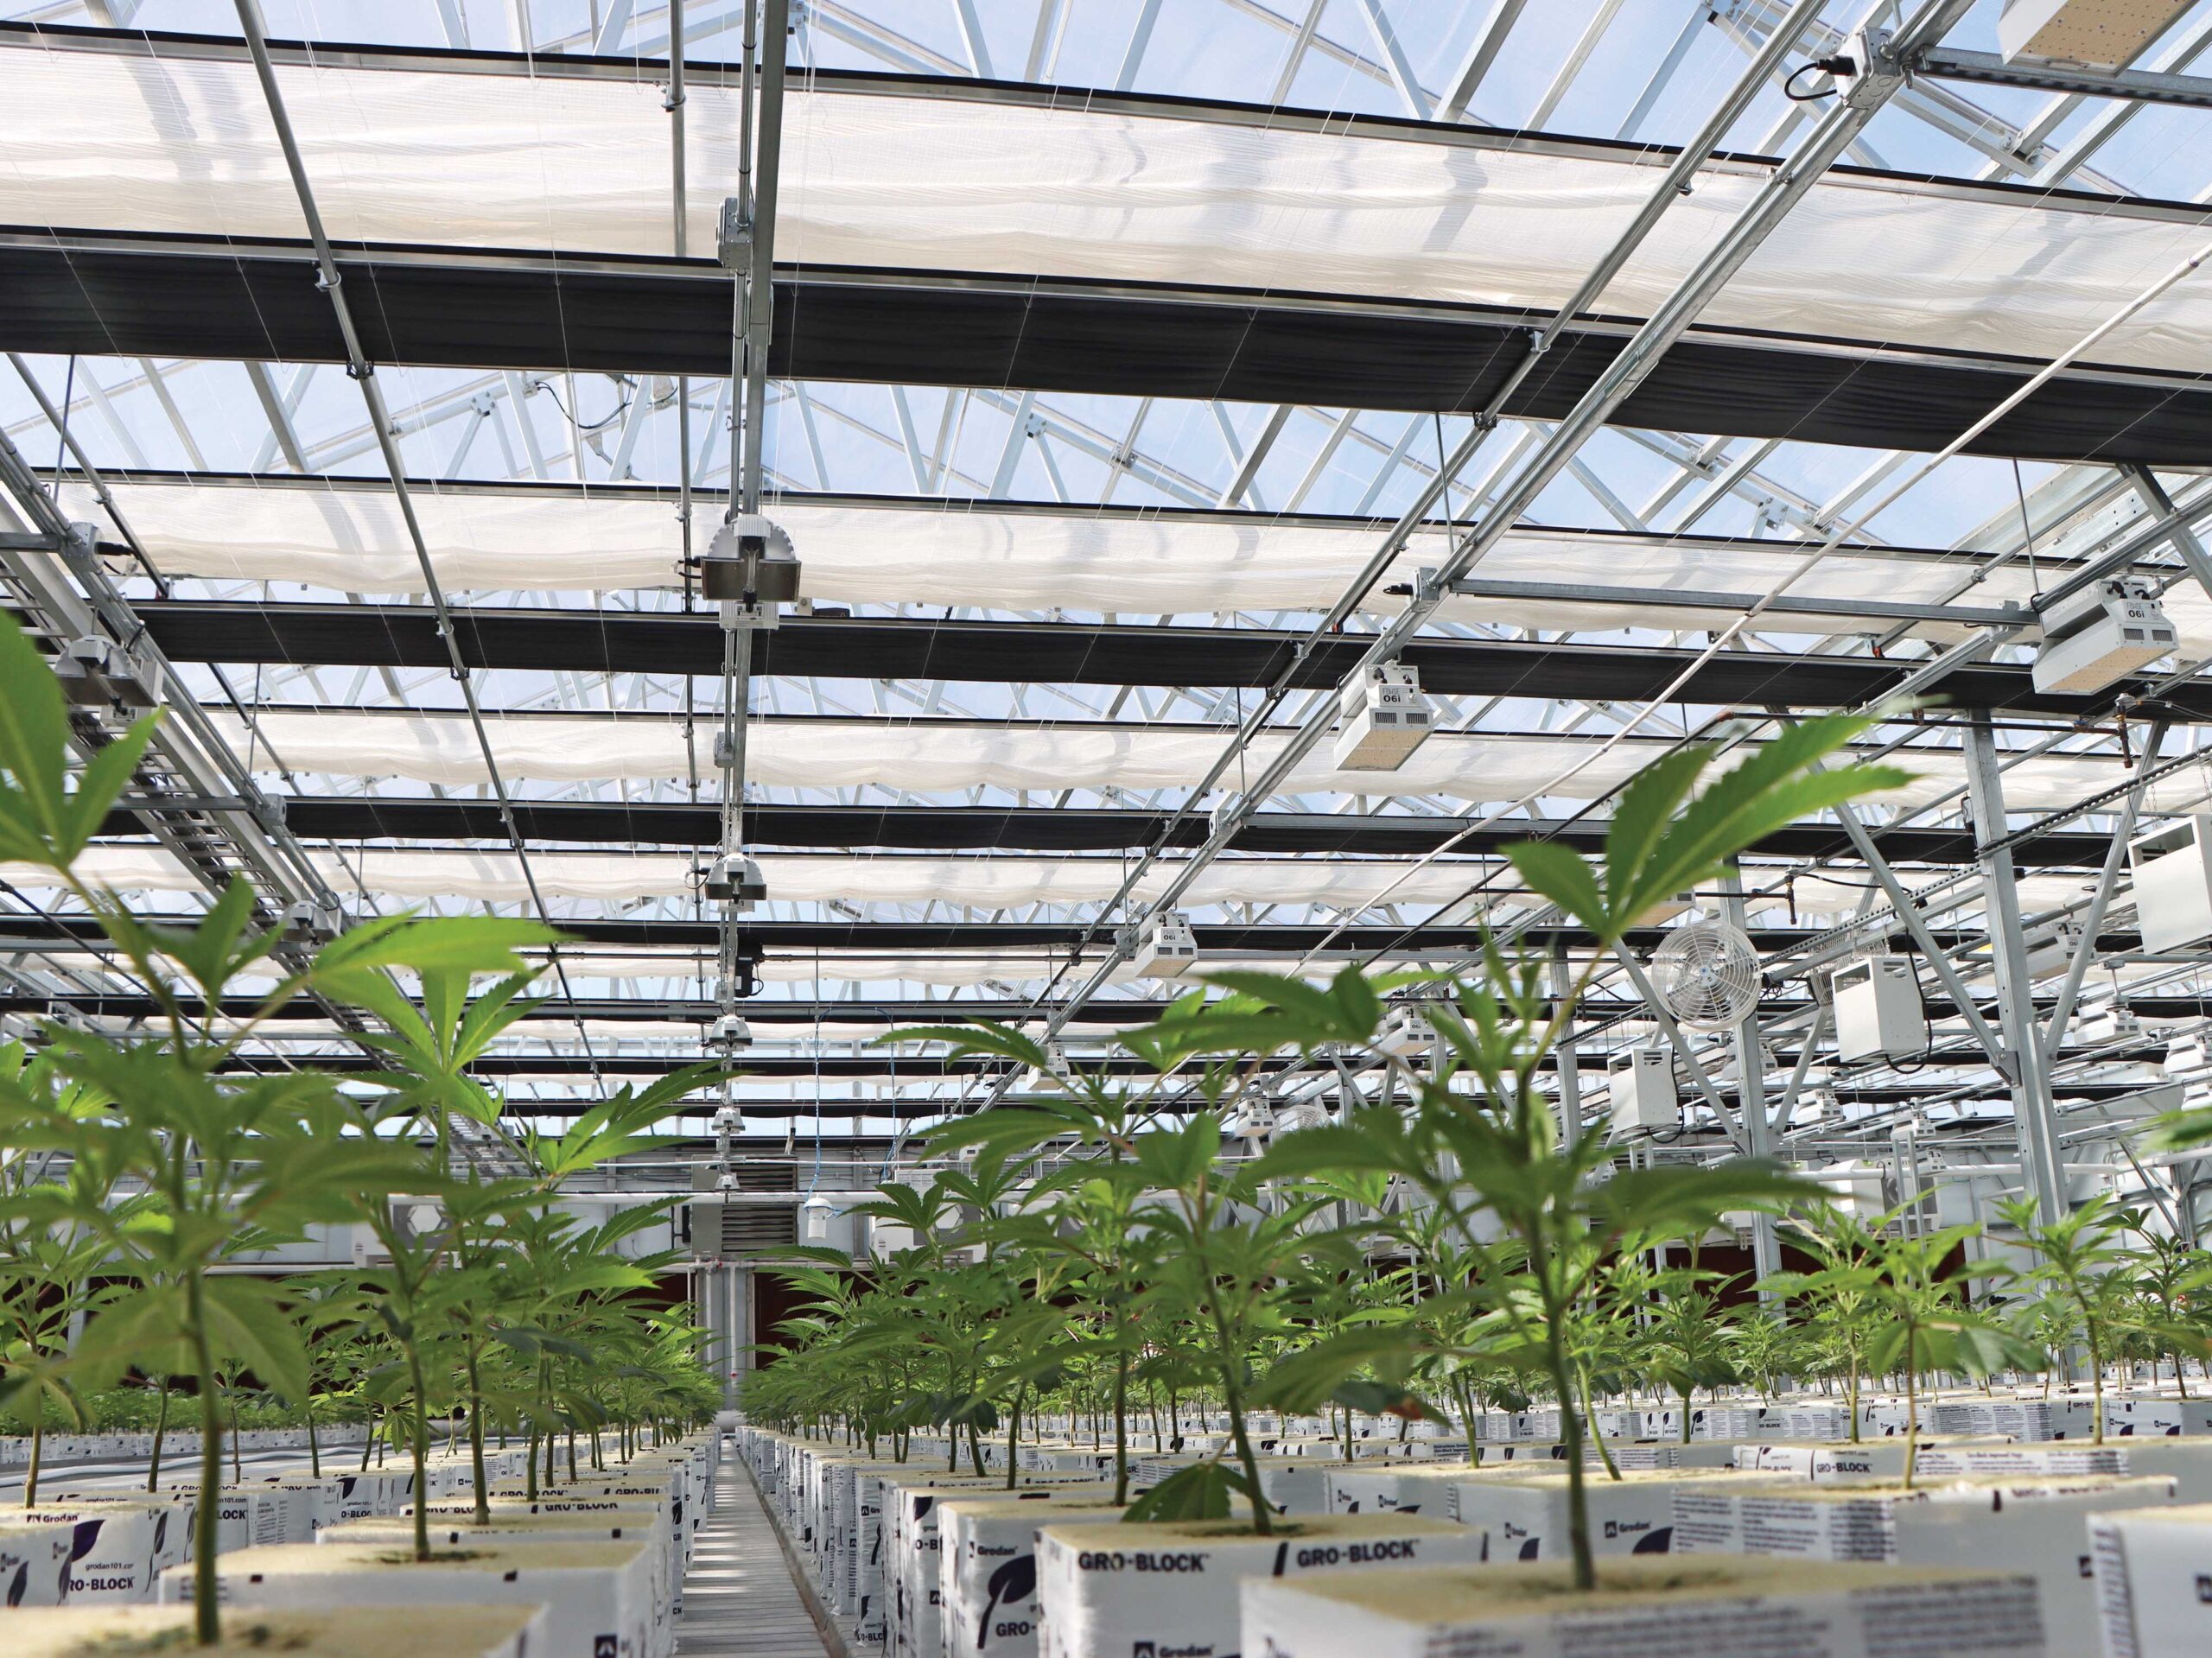 cannabis growing in gro blocks inside a greenhouse